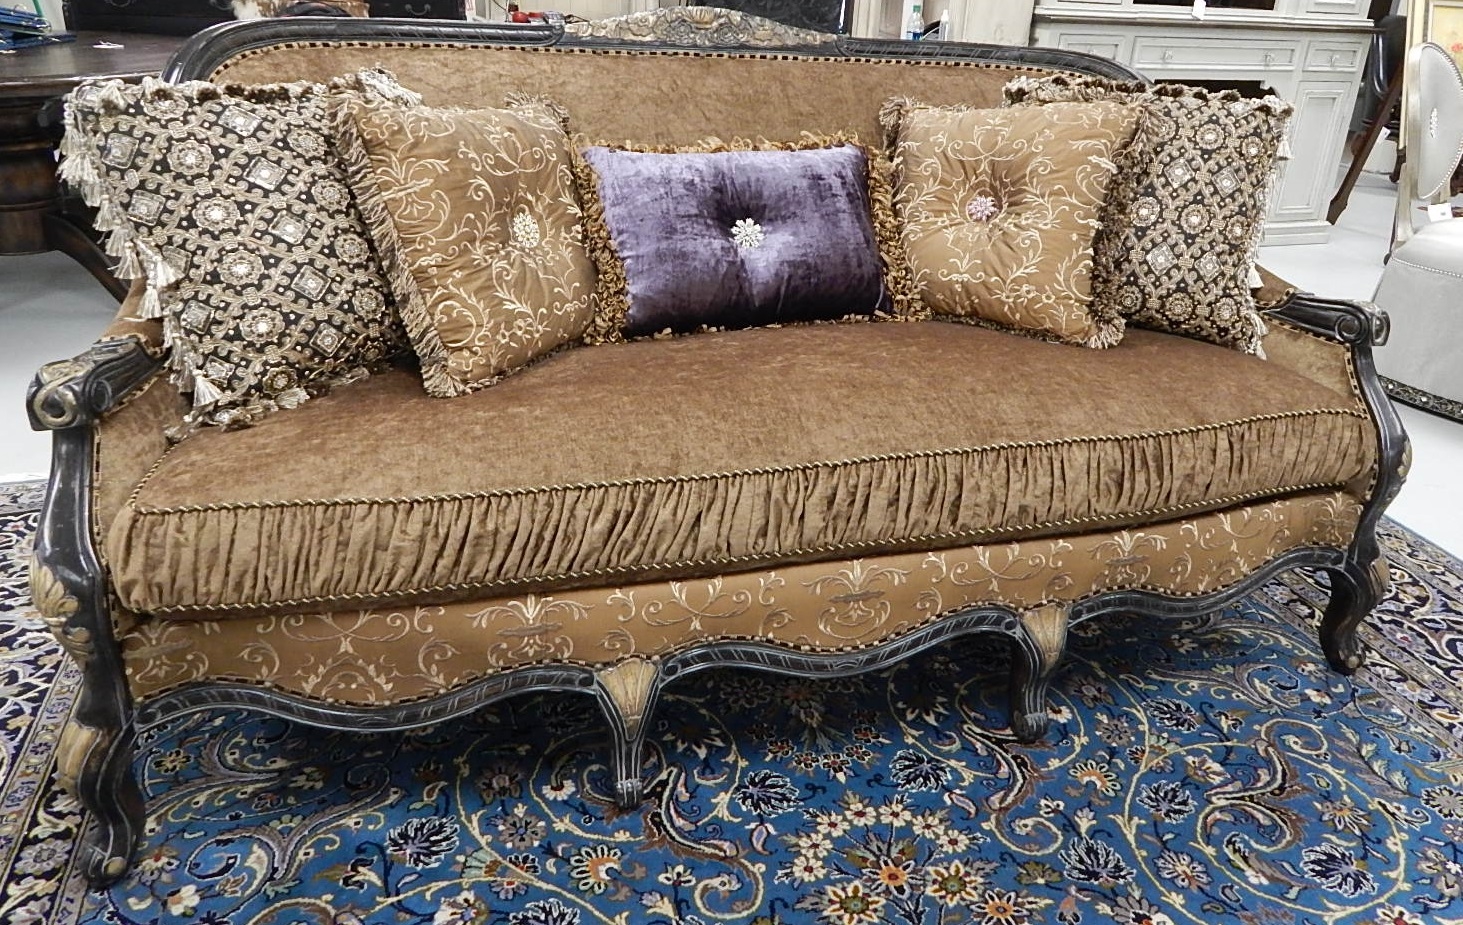 22 iVictoriani style sofa with a iblacki and igoldi color theme 